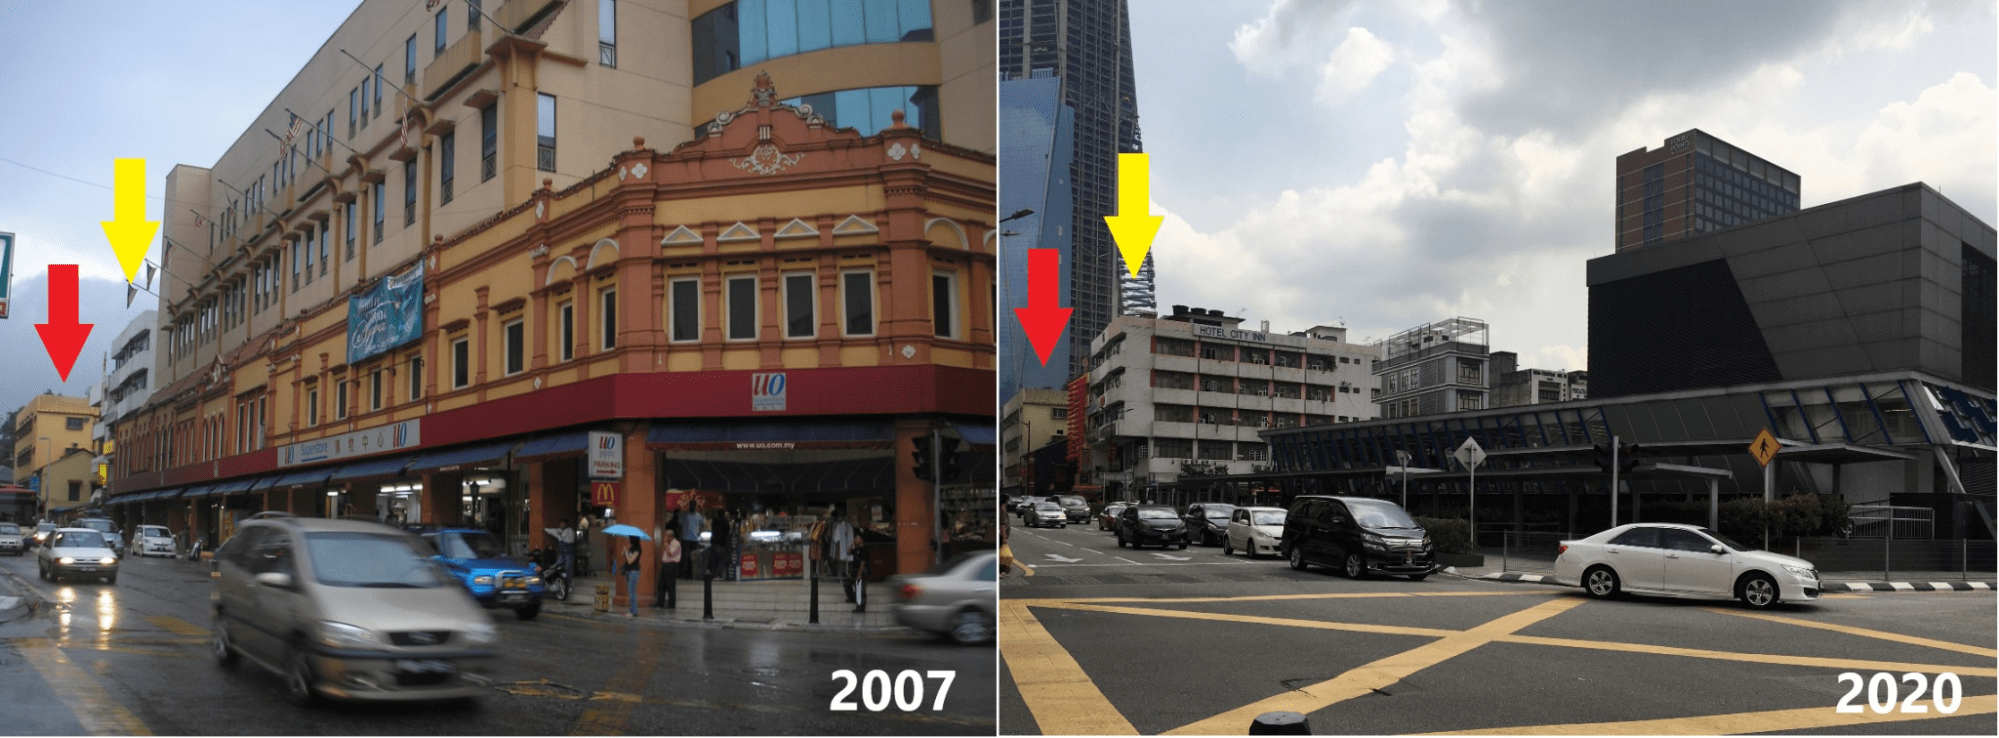 Demolished buildings in KL - before & after